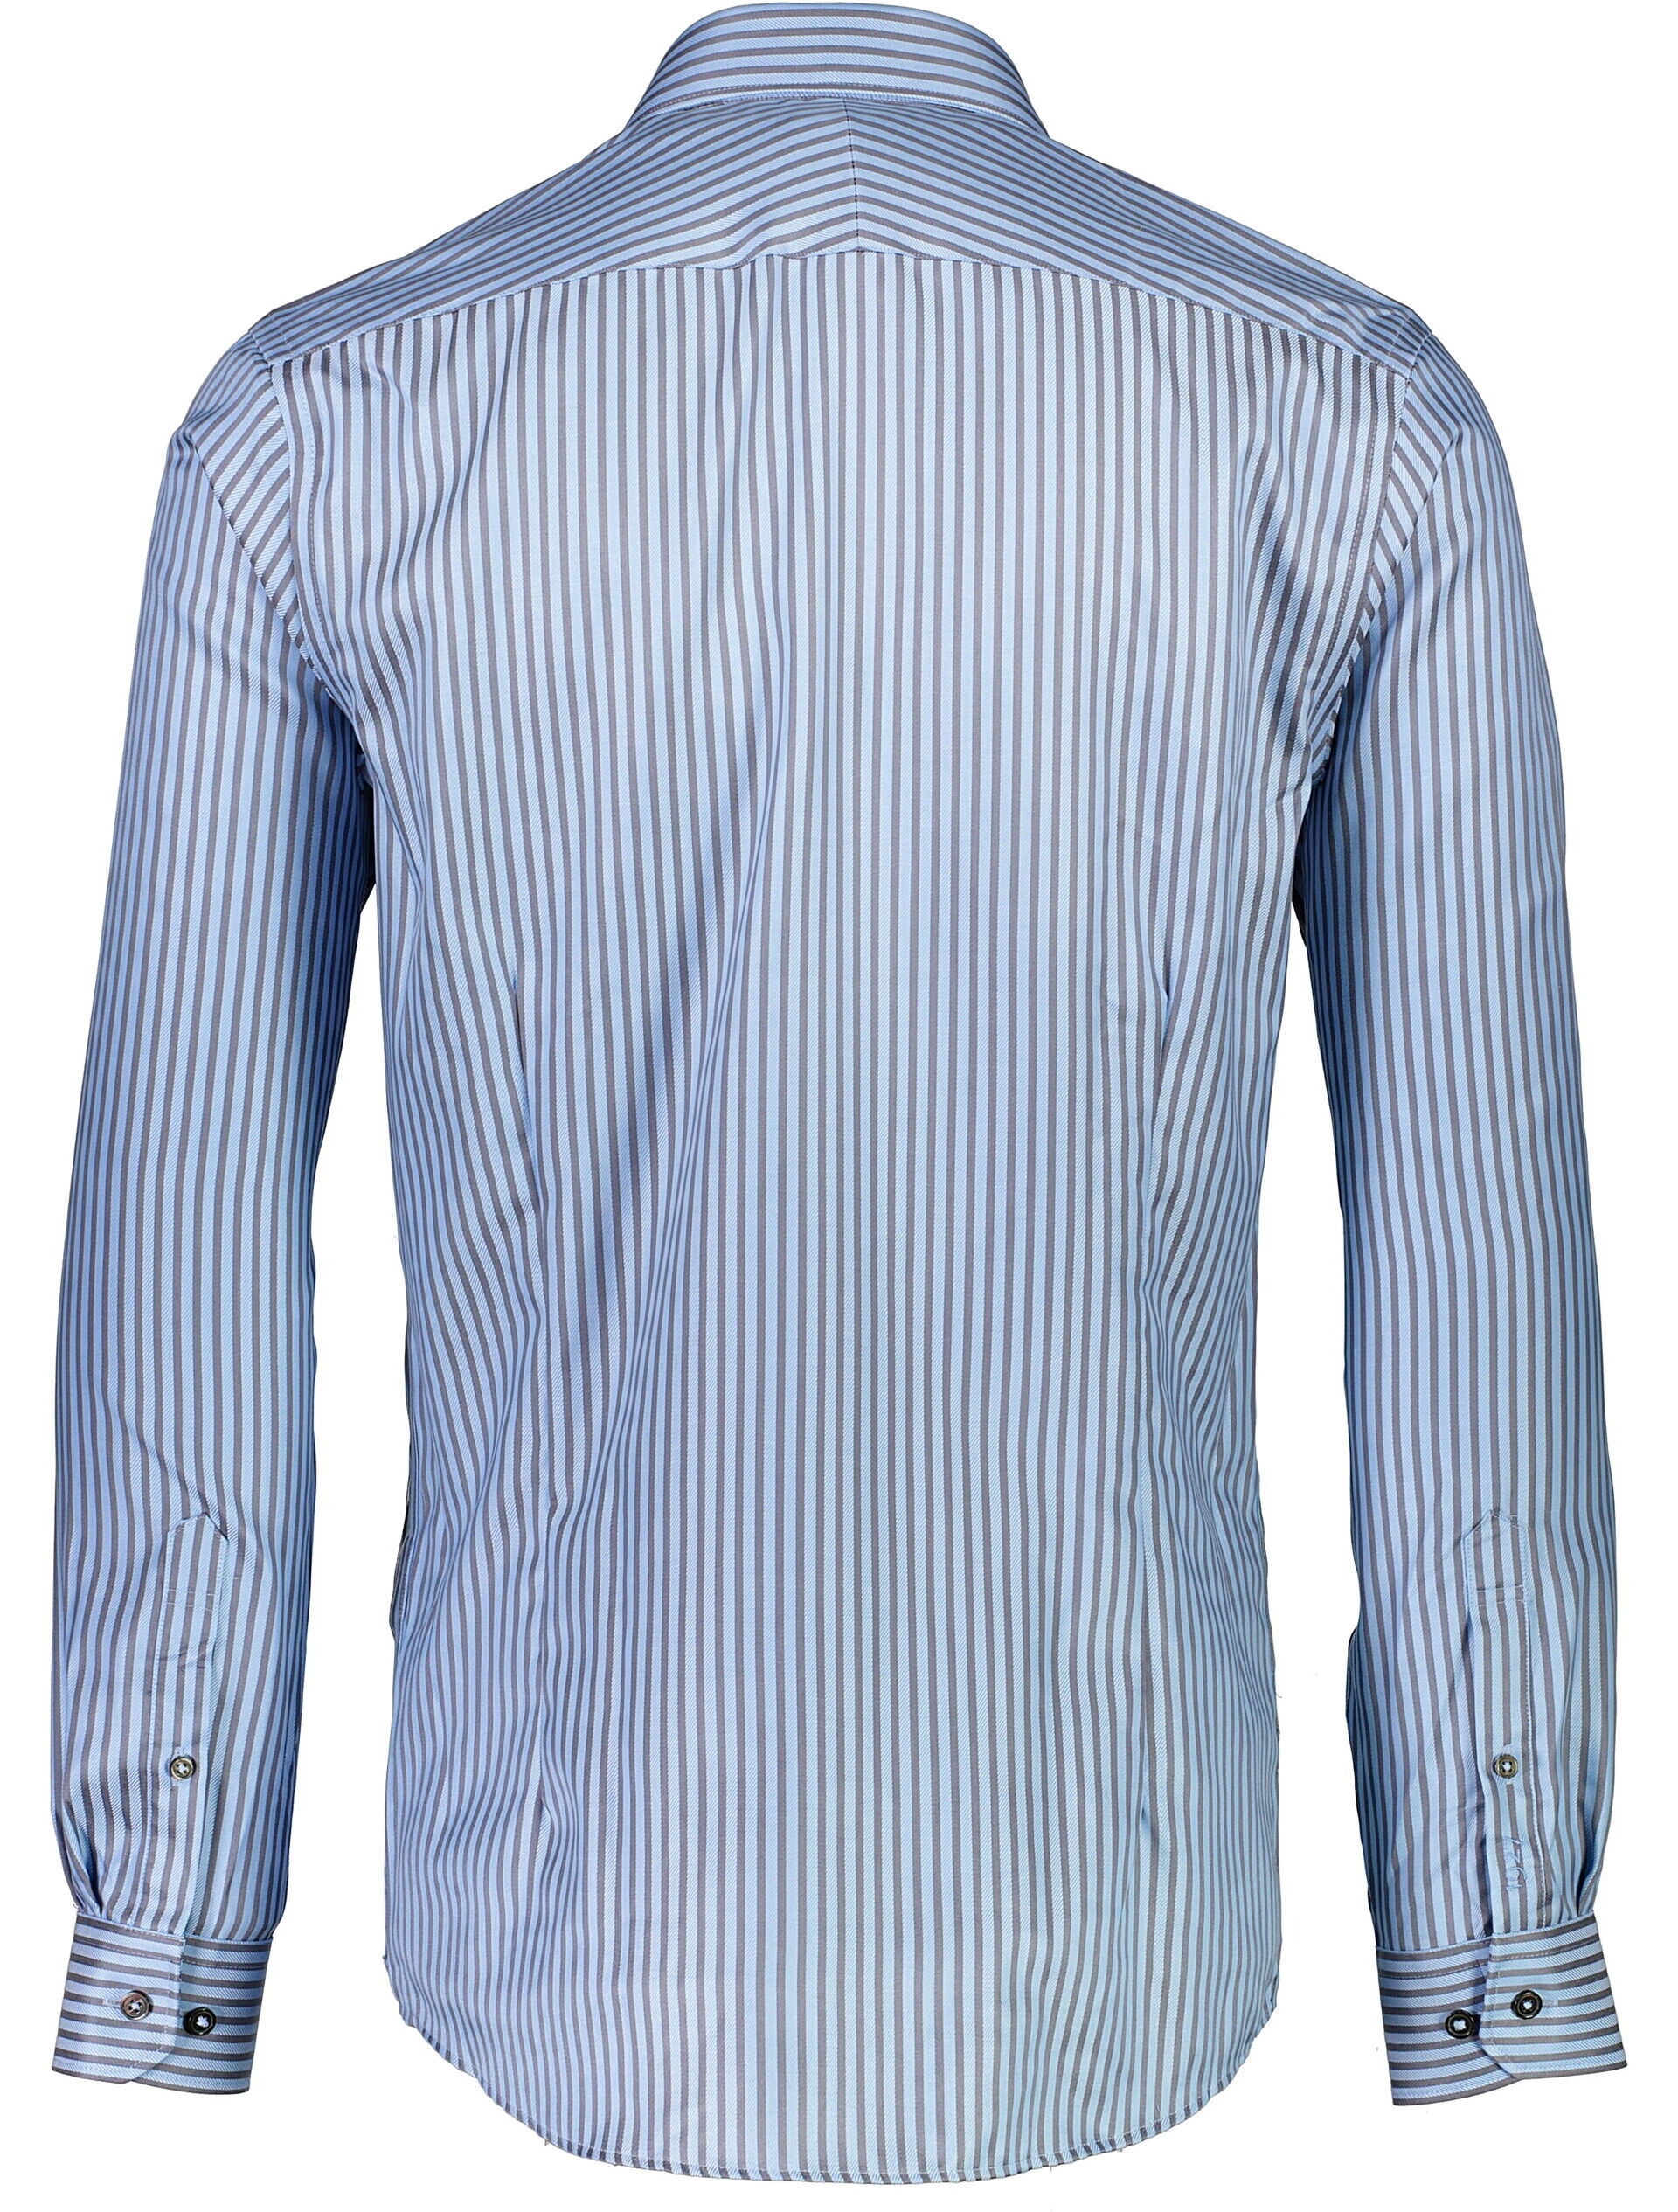 1927 Business casual shirt 30-247176